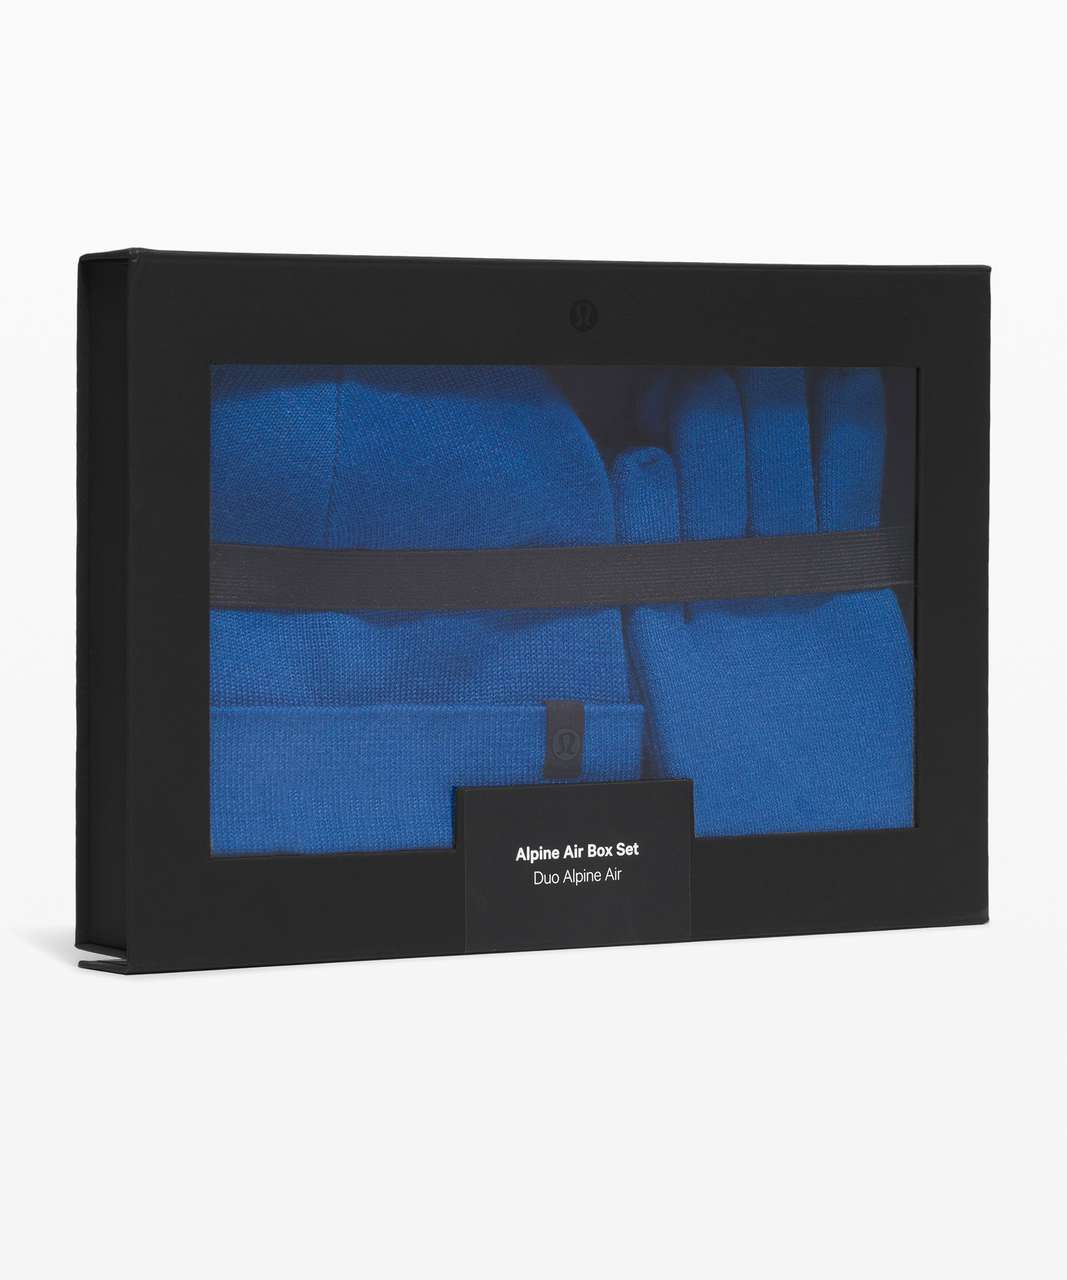 Lululemon Alpine Air Box Set - Regatta Blue / Black